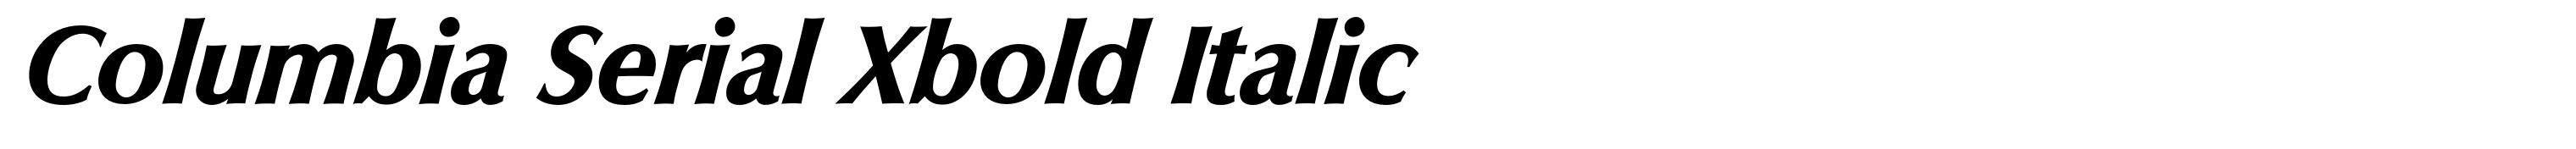 Columbia Serial Xbold Italic